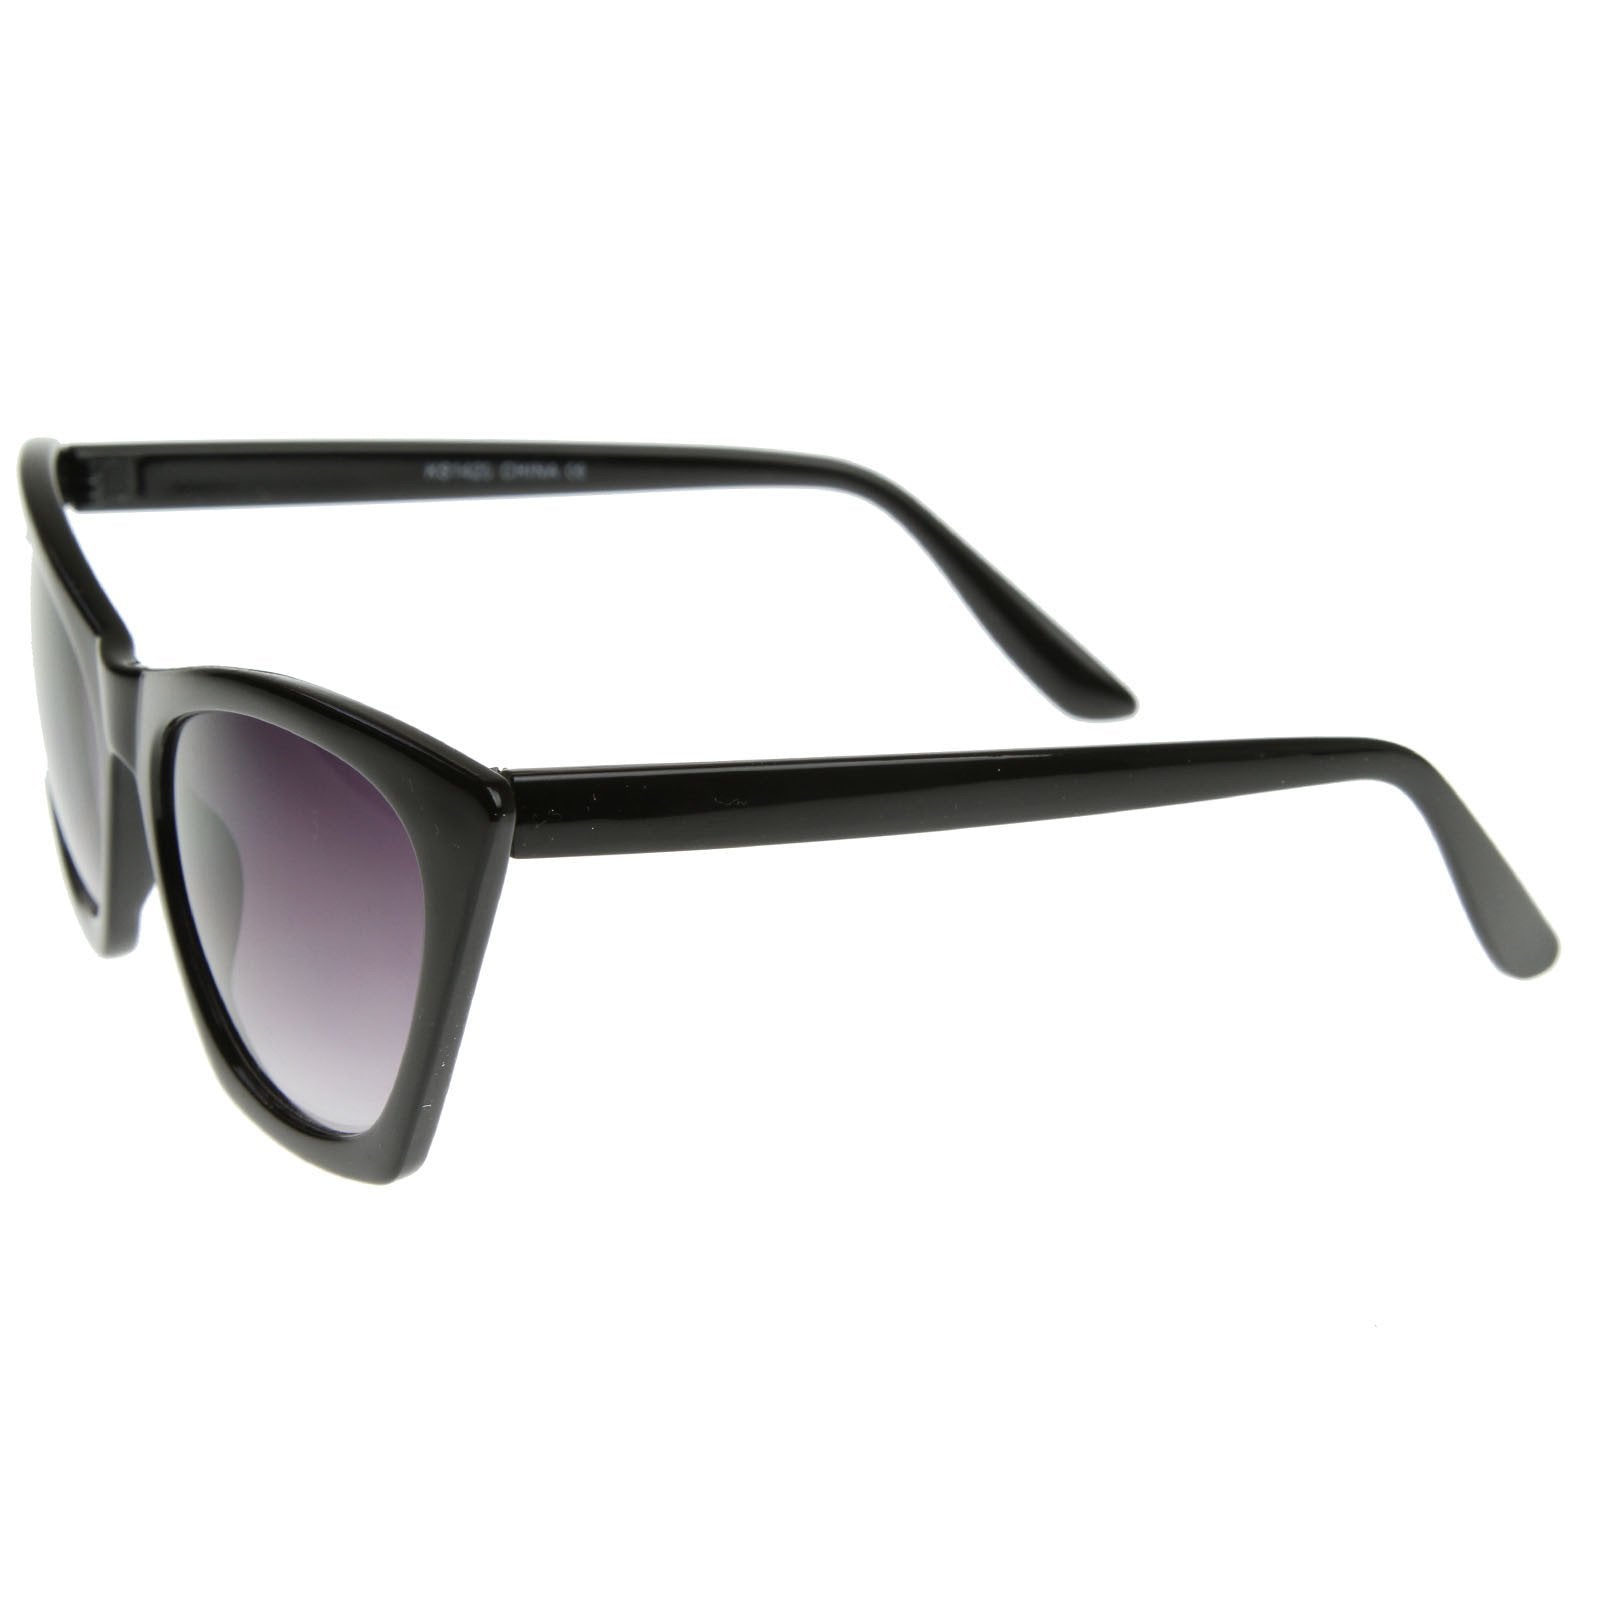 Unique Sharp Edge Cat Eye Women's Fashion Sunglasses - zeroUV